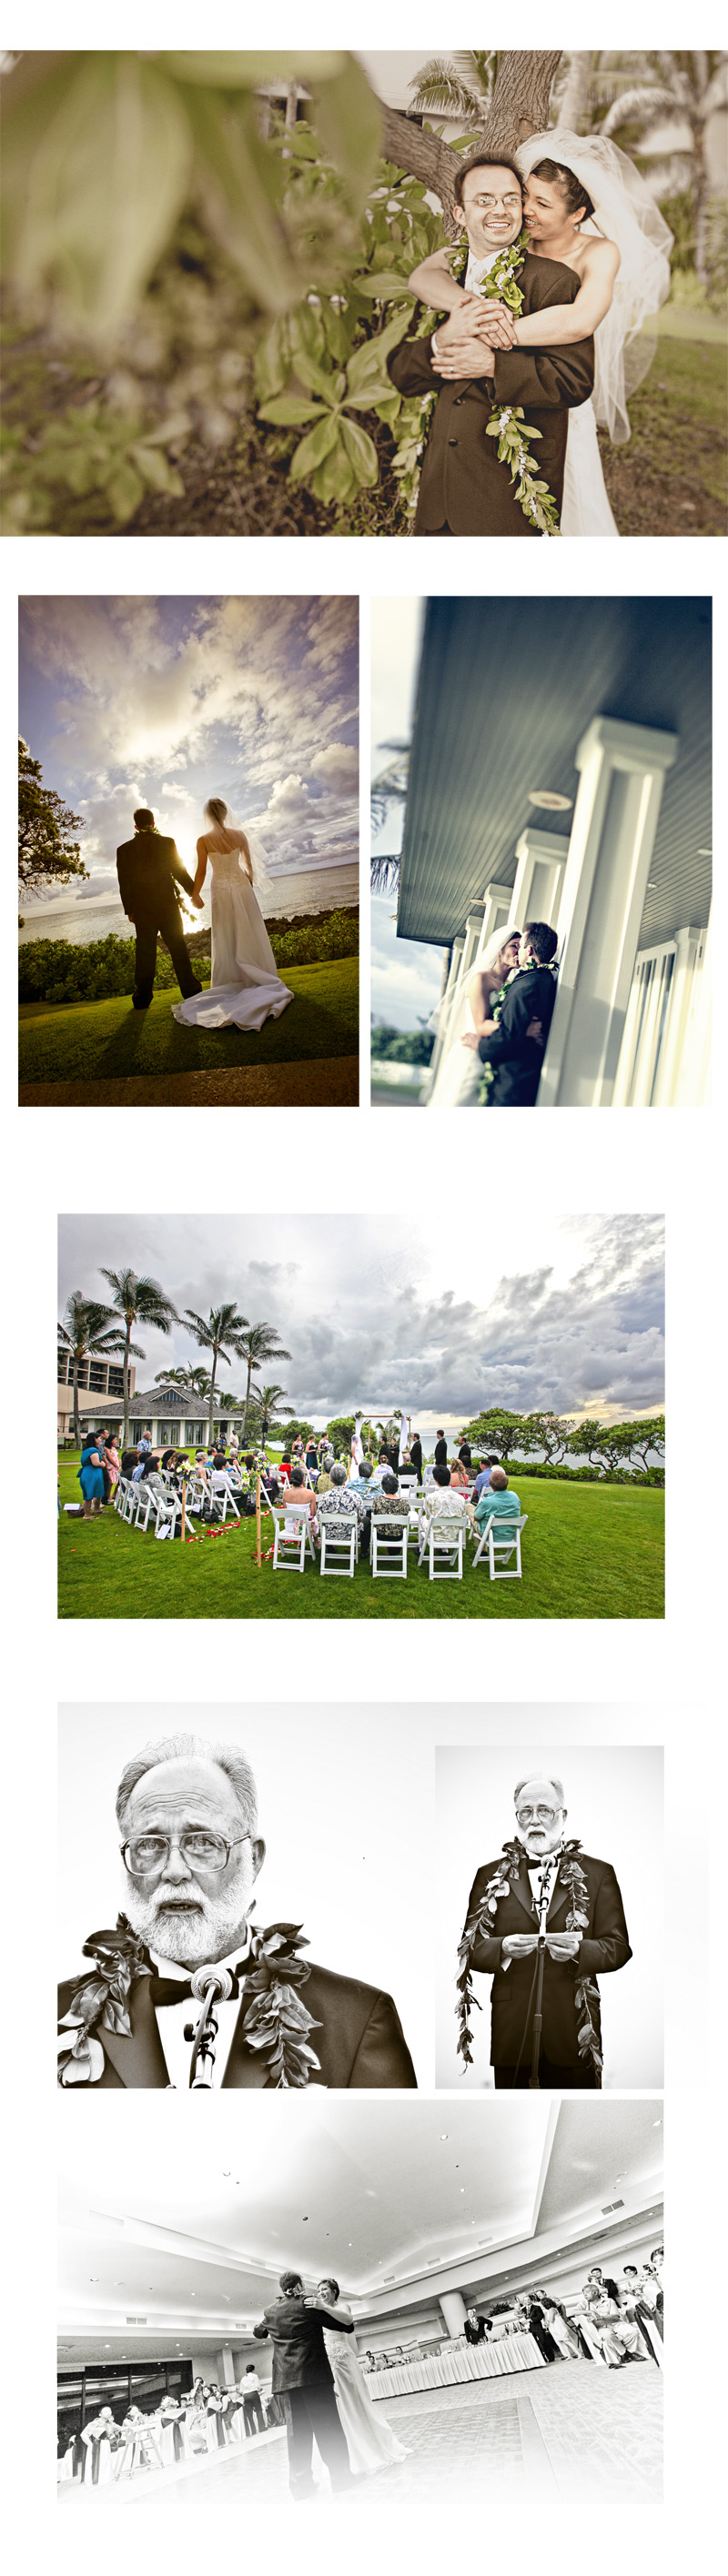 Shawn Starr : Modern Wedding Photography : Pittsburgh Wedding Photographer : Turtle Bay Resort